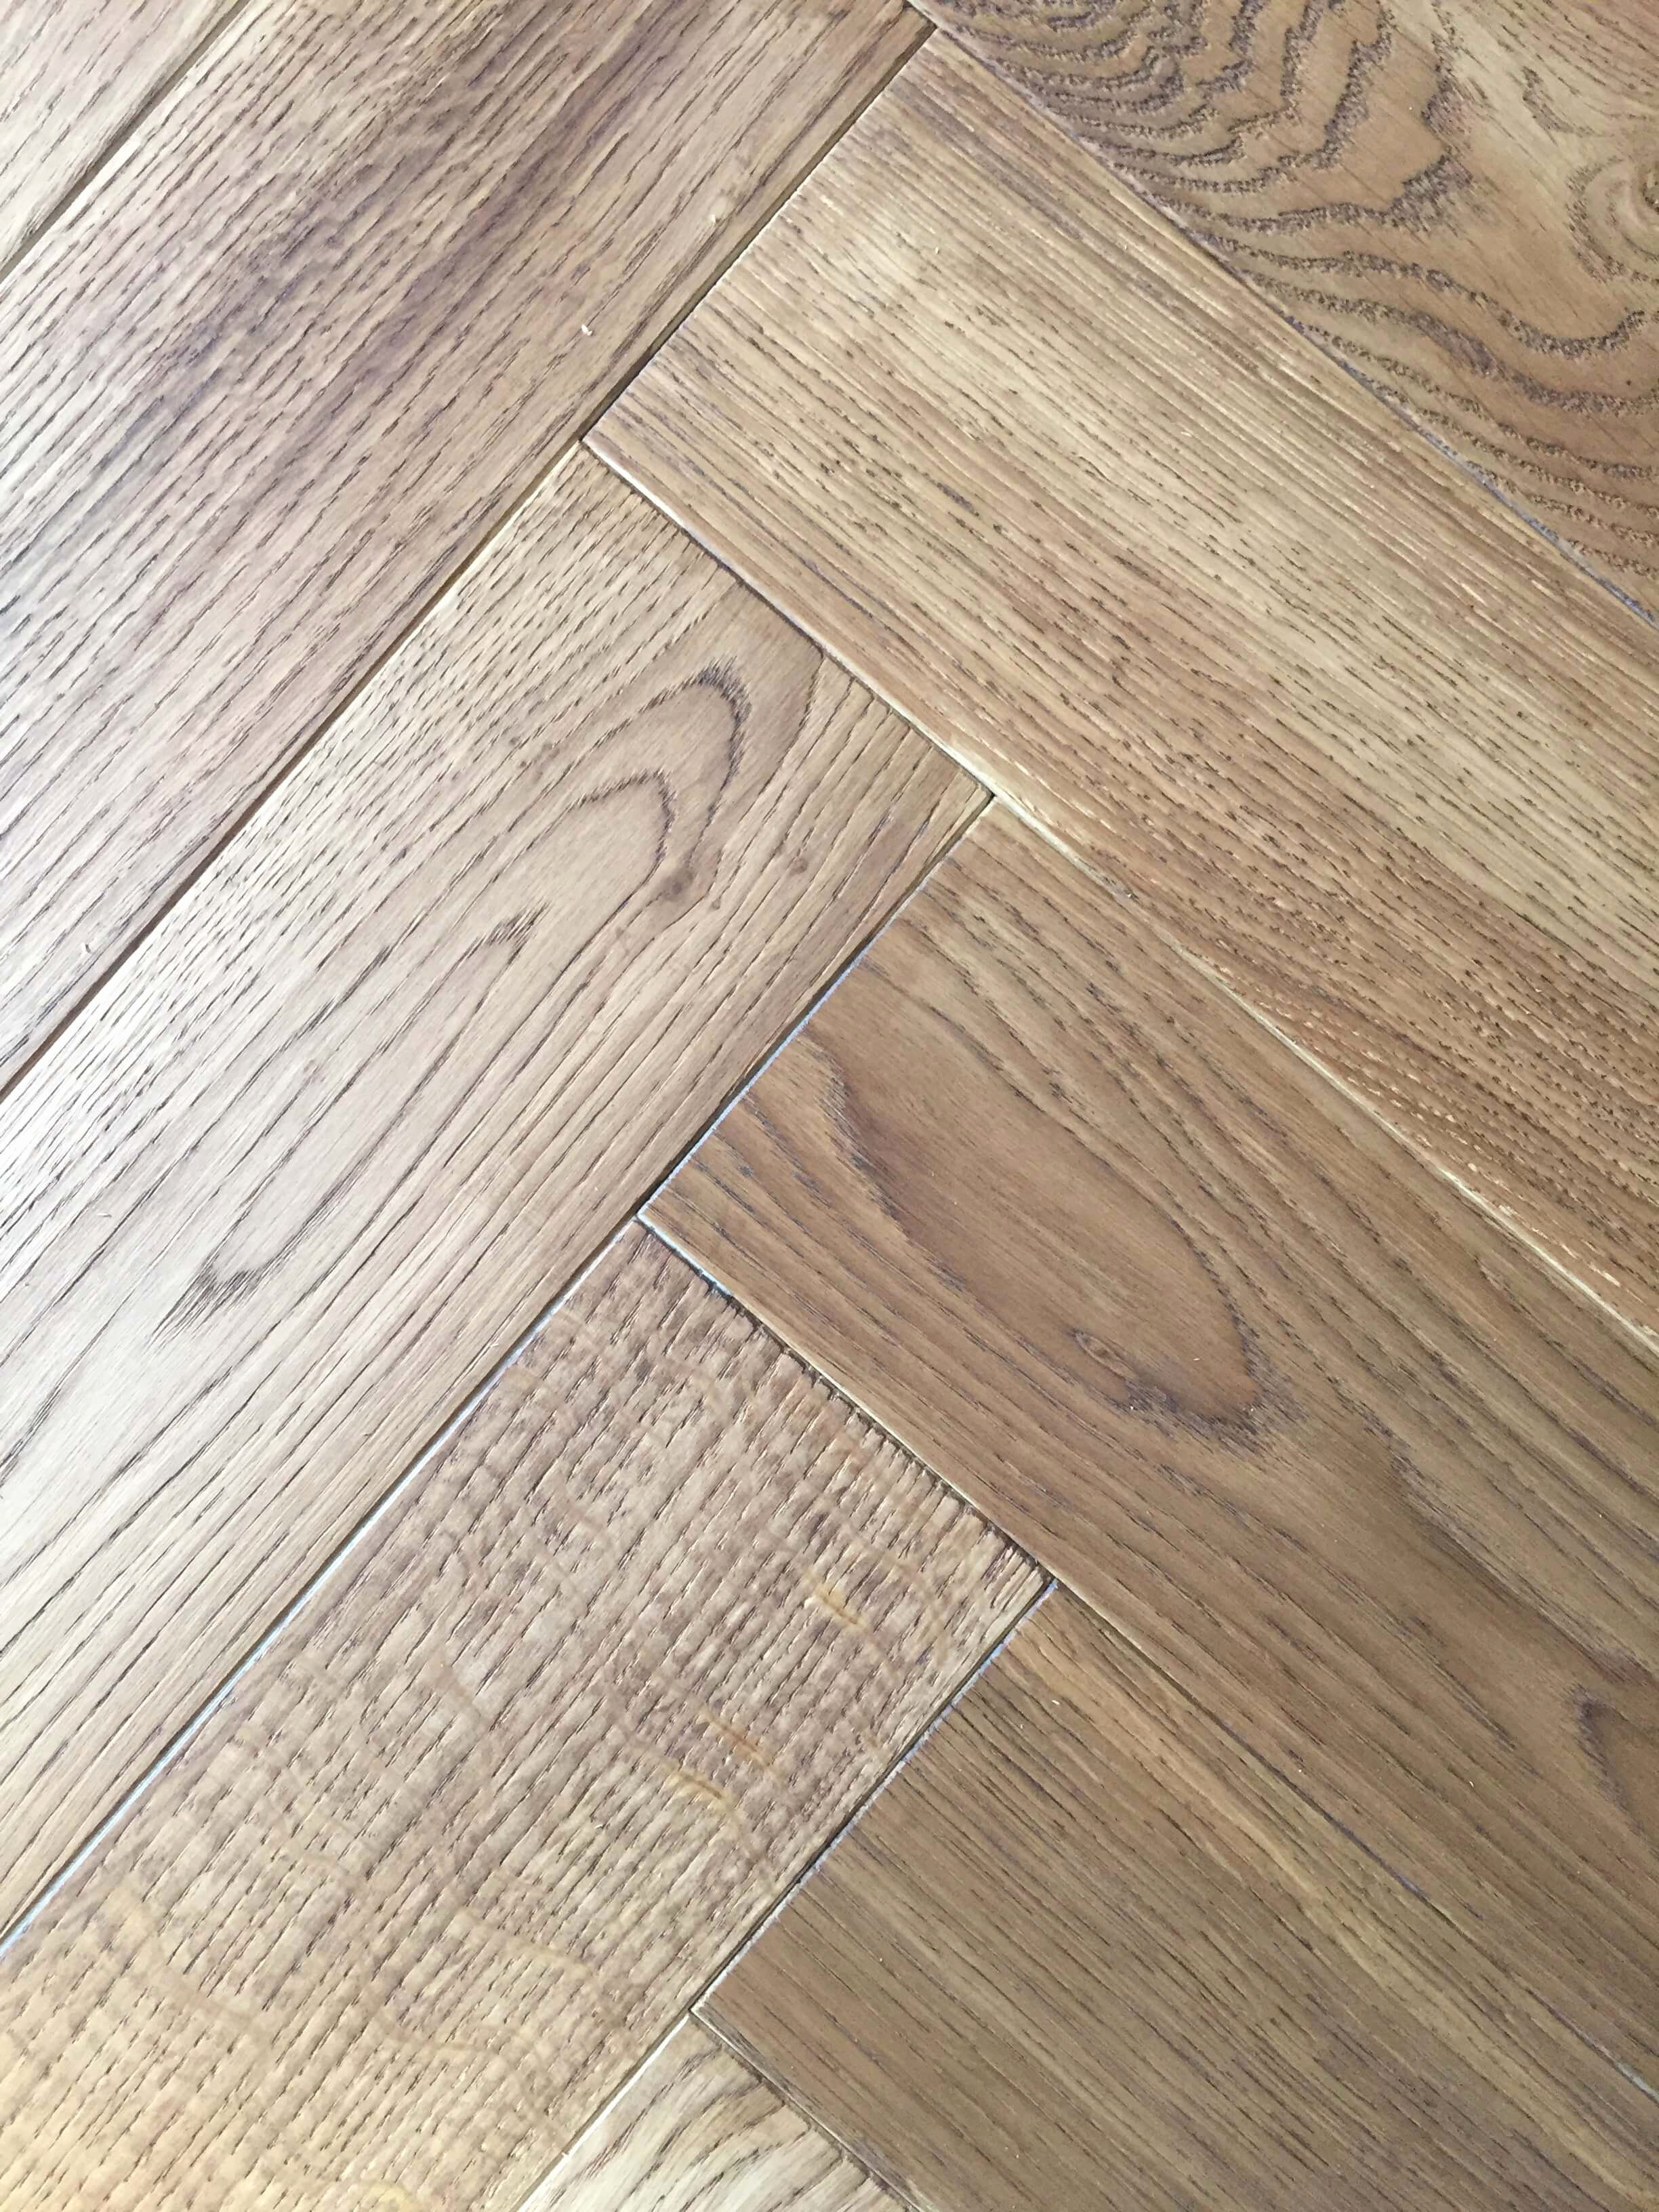 13 Stylish Hardwood Floor Refinishing Charlotte Nc 2022 free download hardwood floor refinishing charlotte nc of wood floorings in netherlands archives wlcu for wood 1